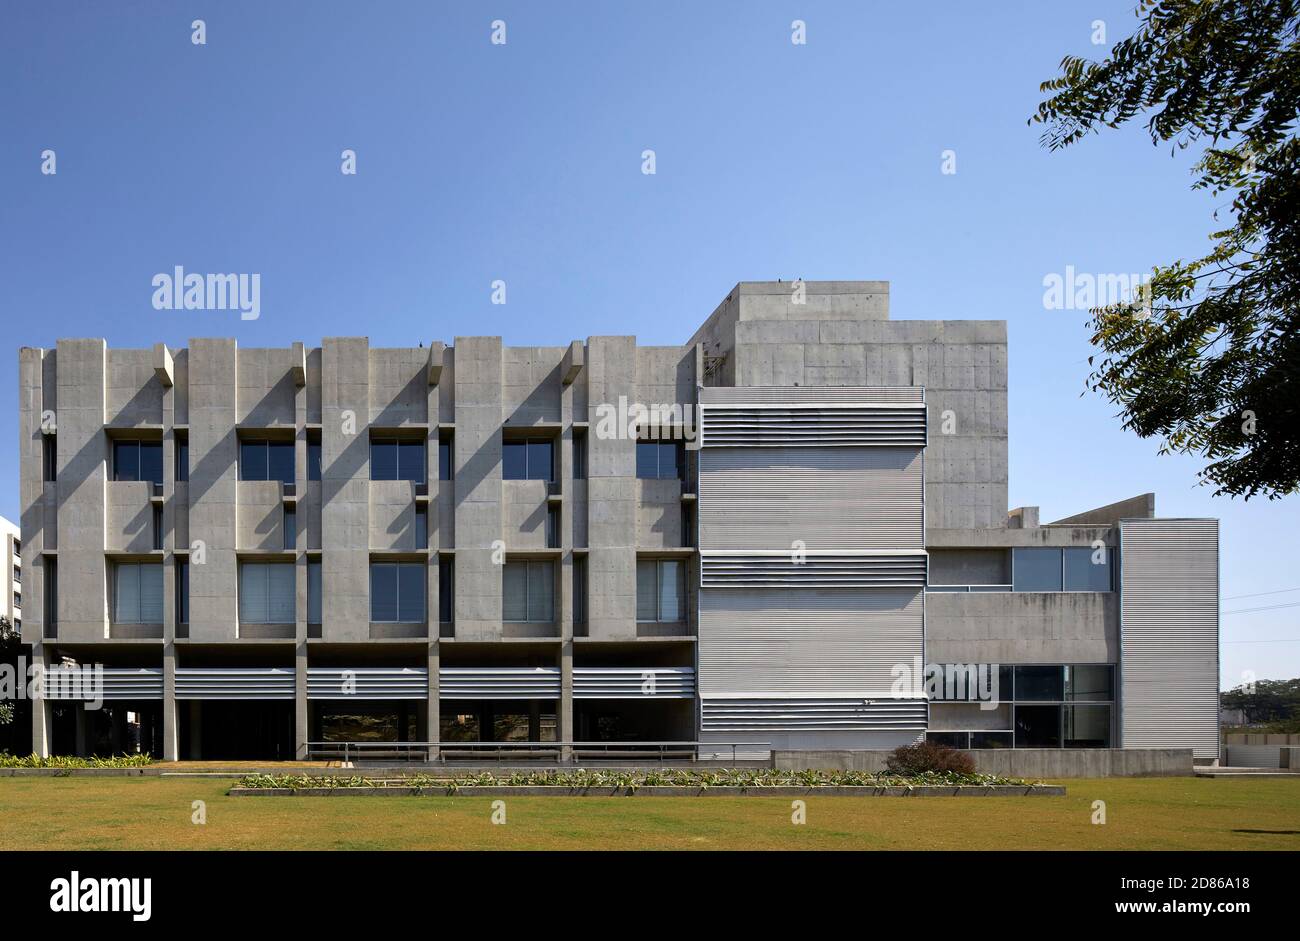 Vue latérale en fin d'après-midi. Gihed Credai, Ahmedabad, Inde. Architecte: Matharoo Associates, 2020. Banque D'Images